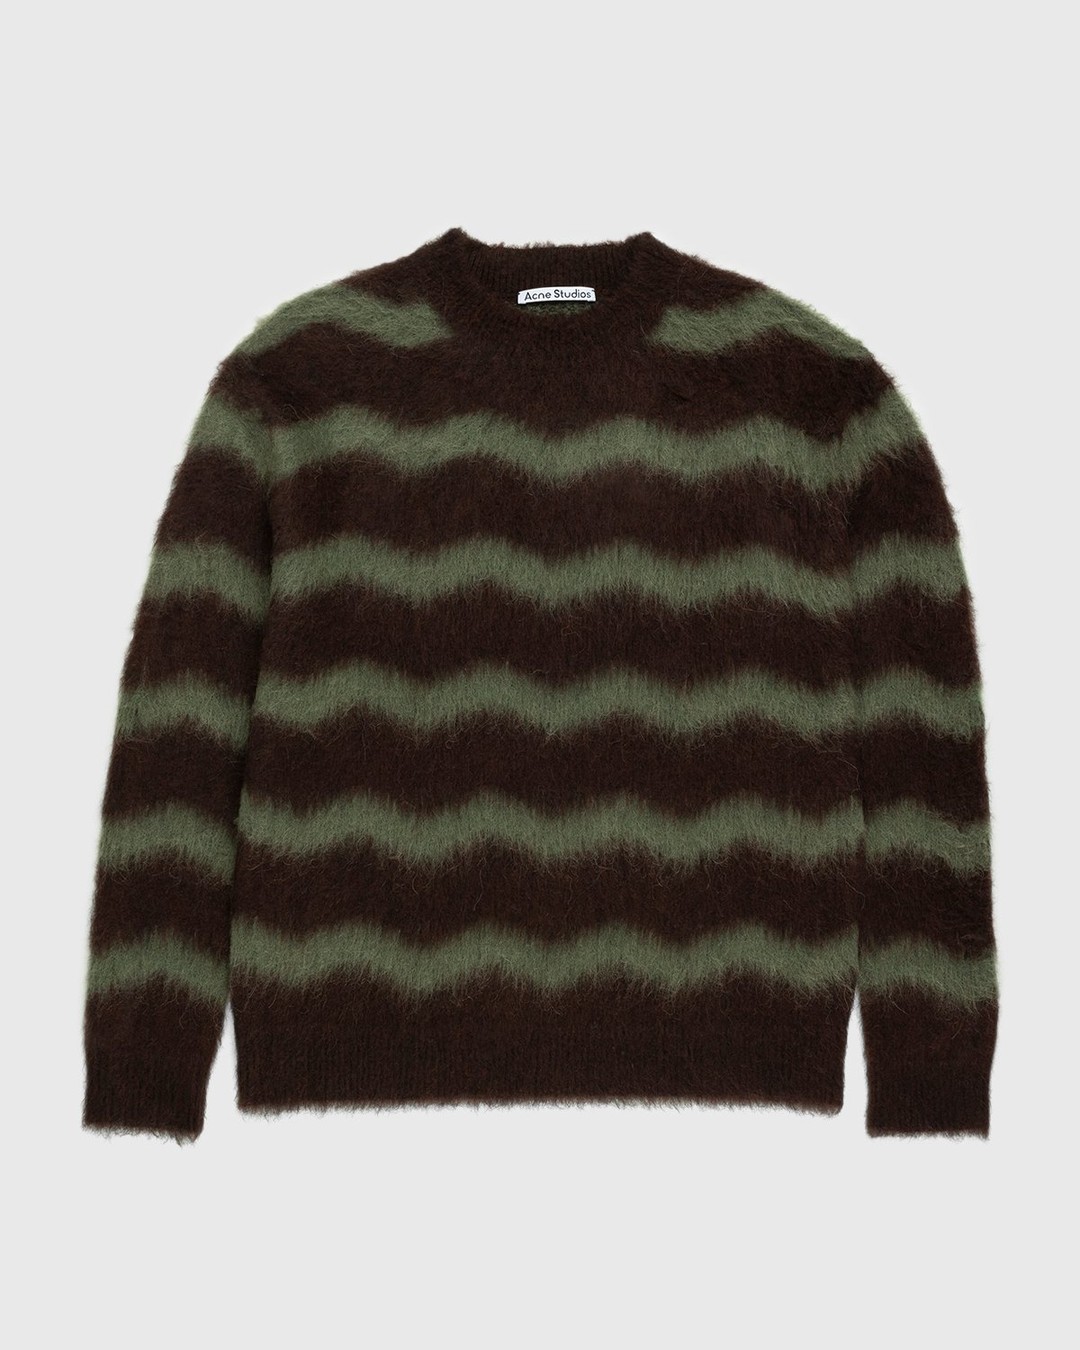 Acne Studios – Striped Fuzzy Sweater Brown/Military Green - Crewnecks - Brown - Image 1